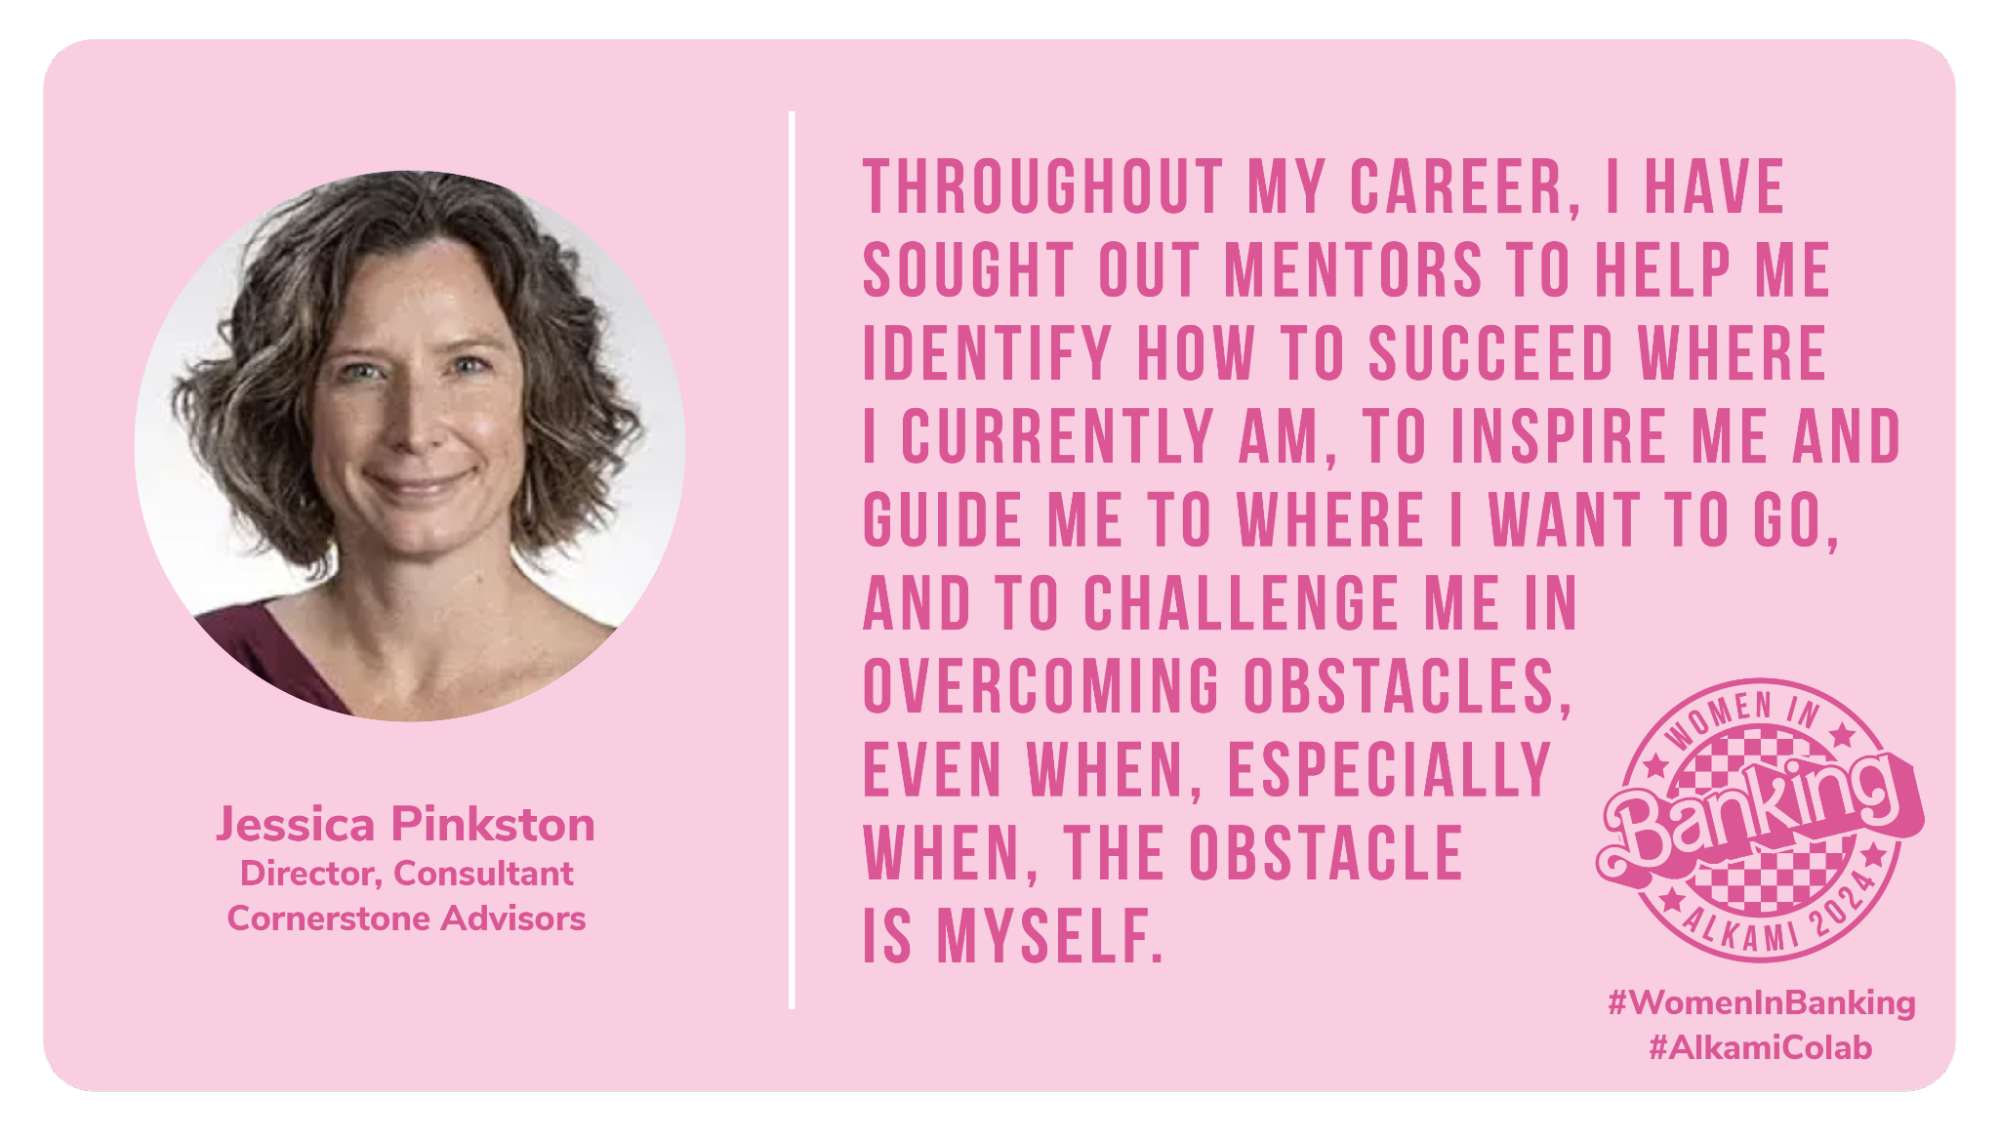 Jessica Pinkston | Director, Consultant | Cornerstone Advisors 